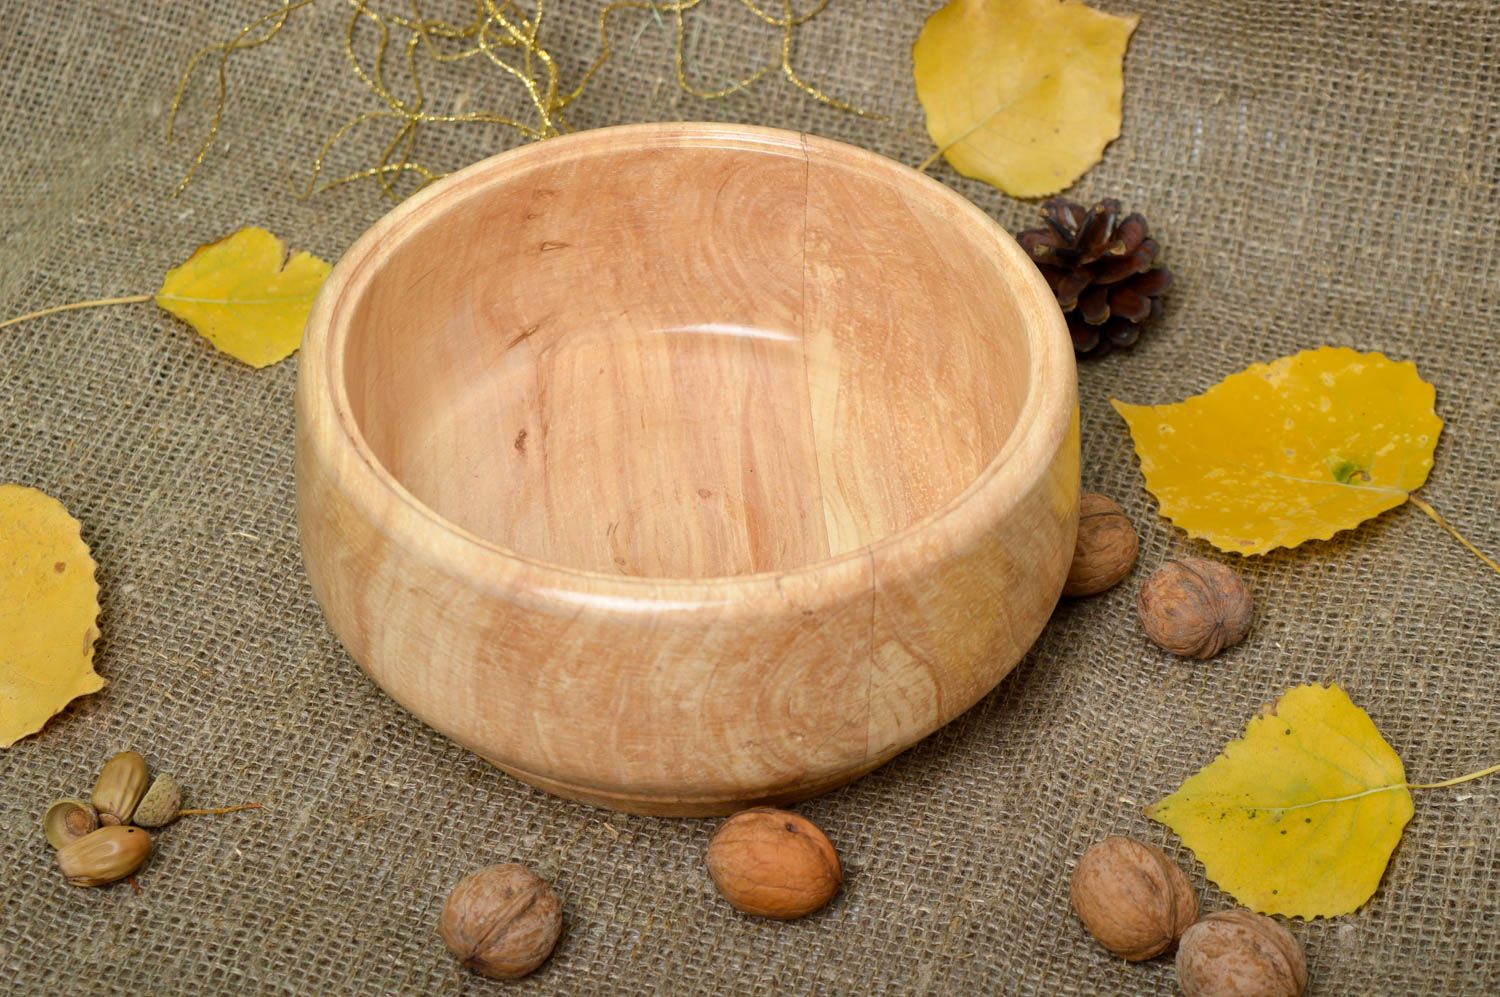 Handmade wooden bowl candy bowl design wood craft kitchen supplies ideas photo 1